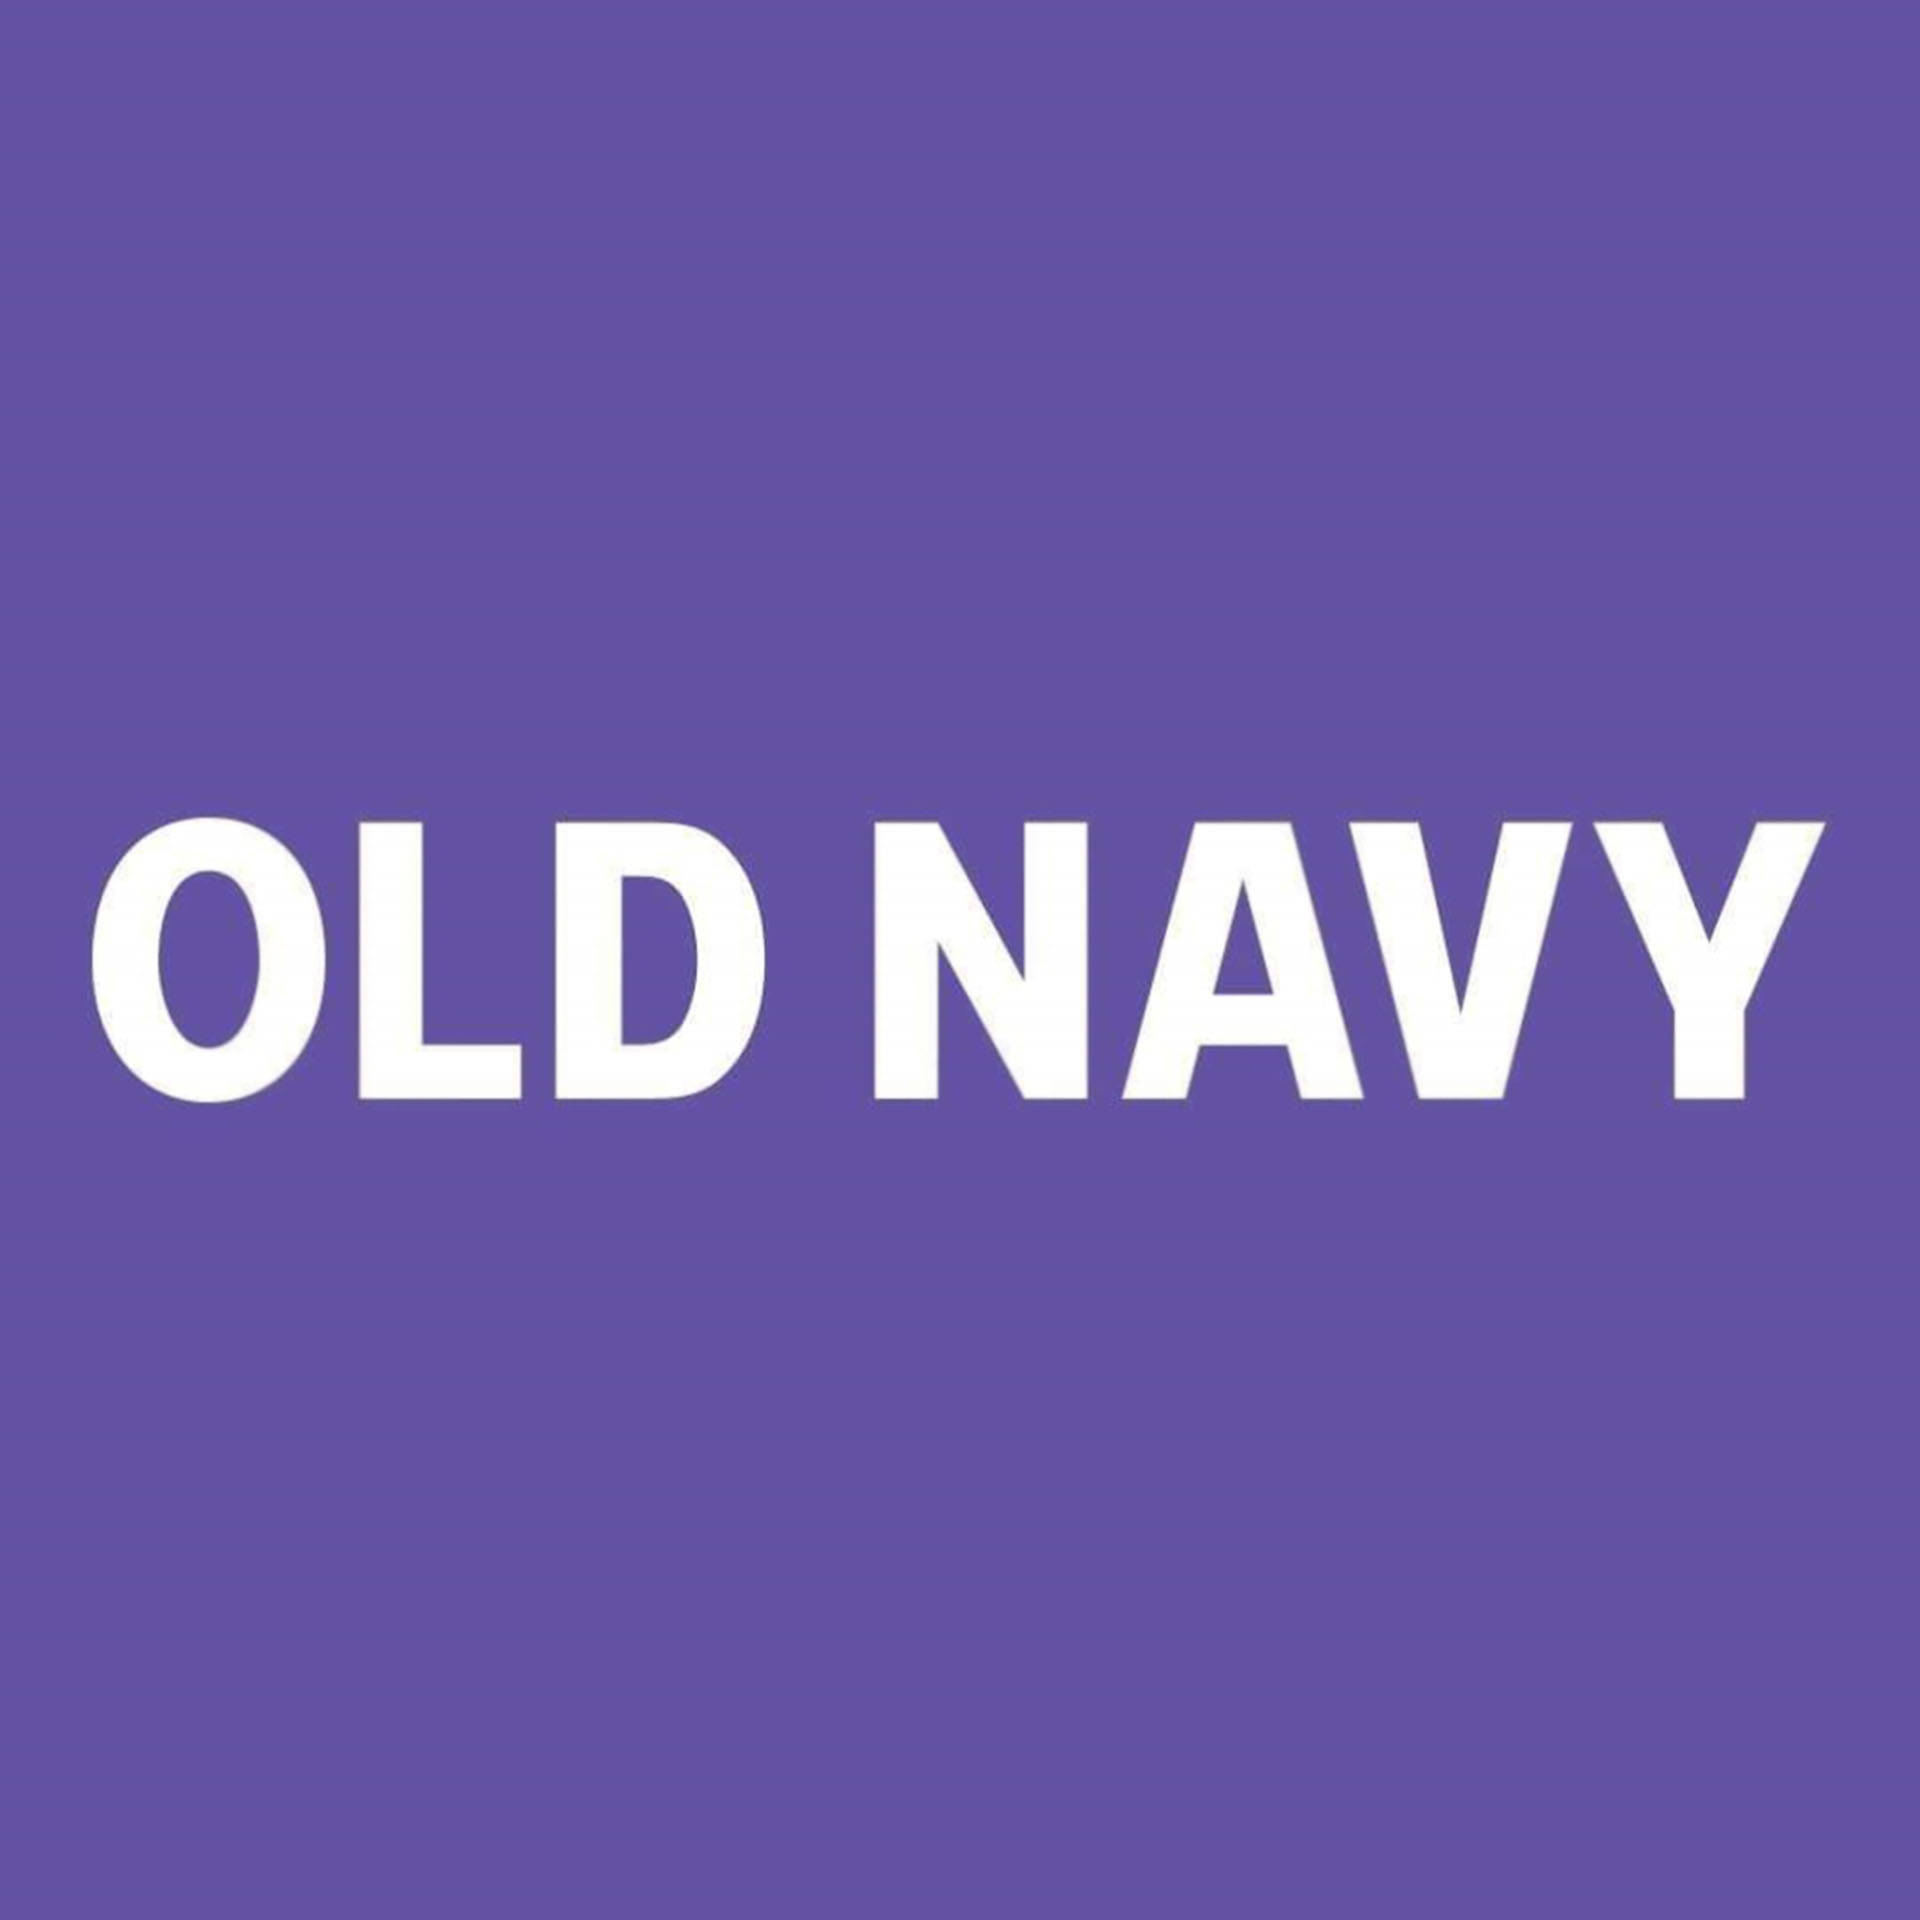 Vibrant Old Navy Logo On A Purple Background